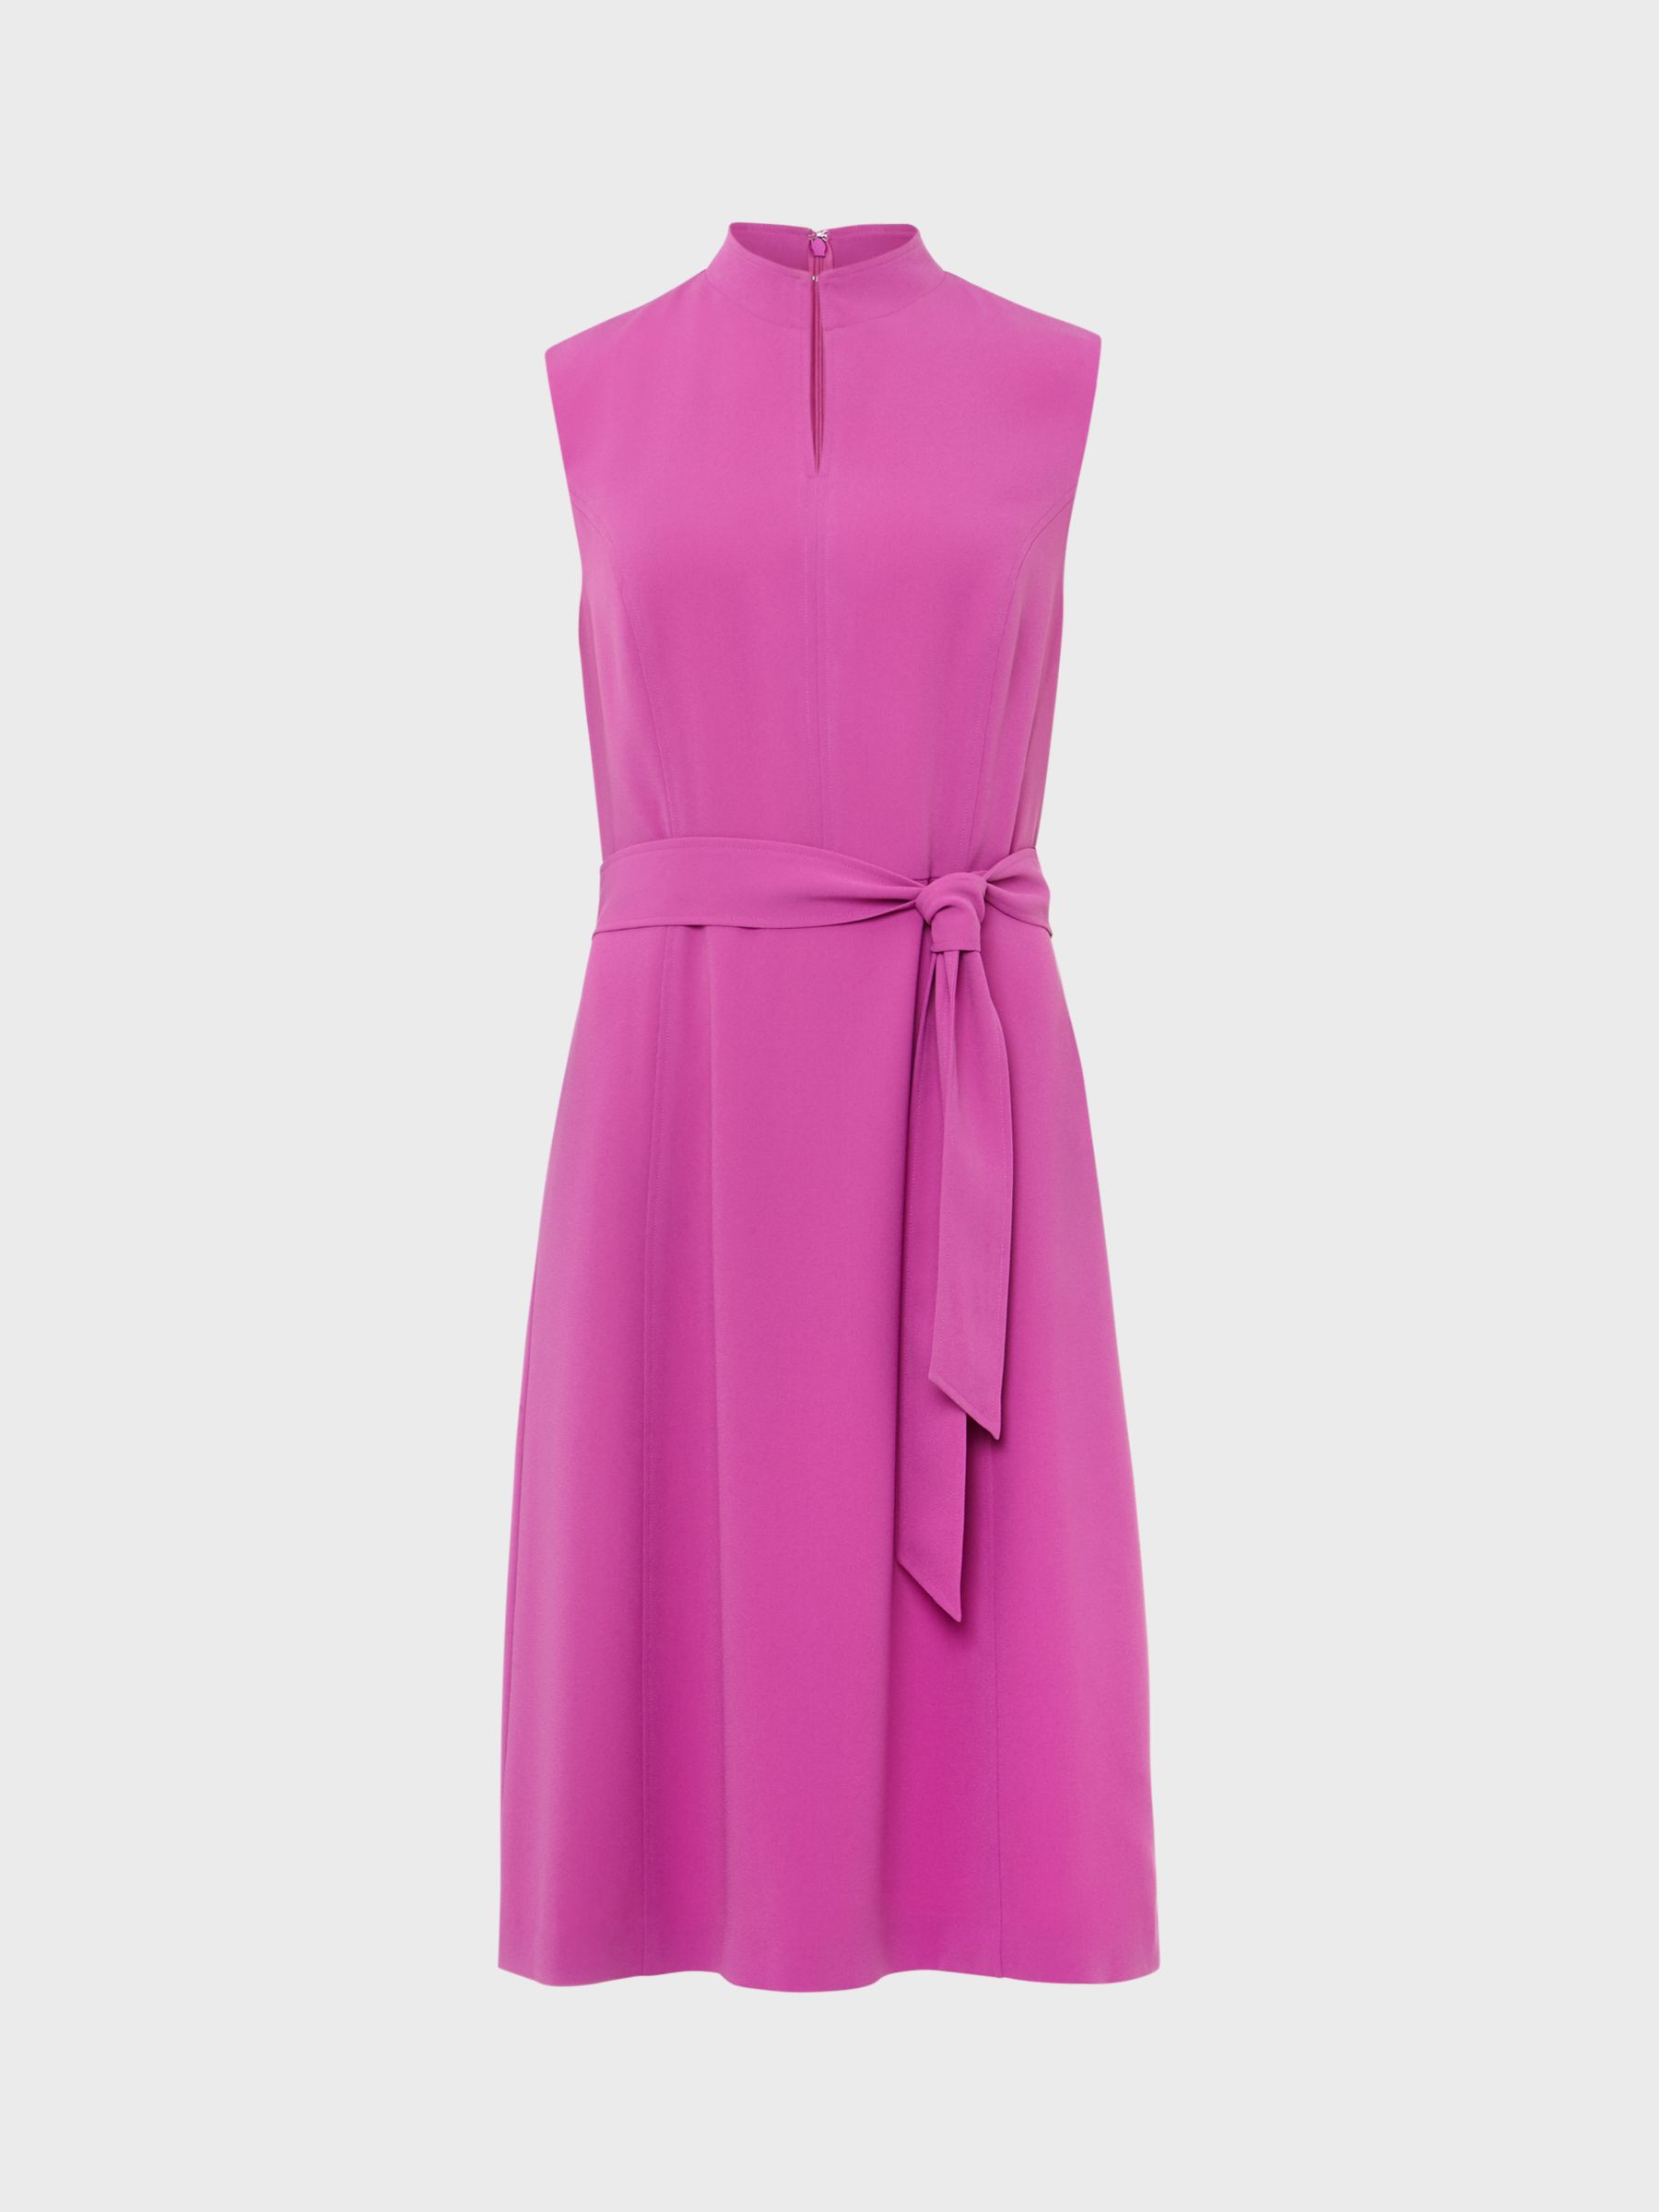 Hobbs Shona Plain Sleeveless Dress, Violet Pink at John Lewis & Partners